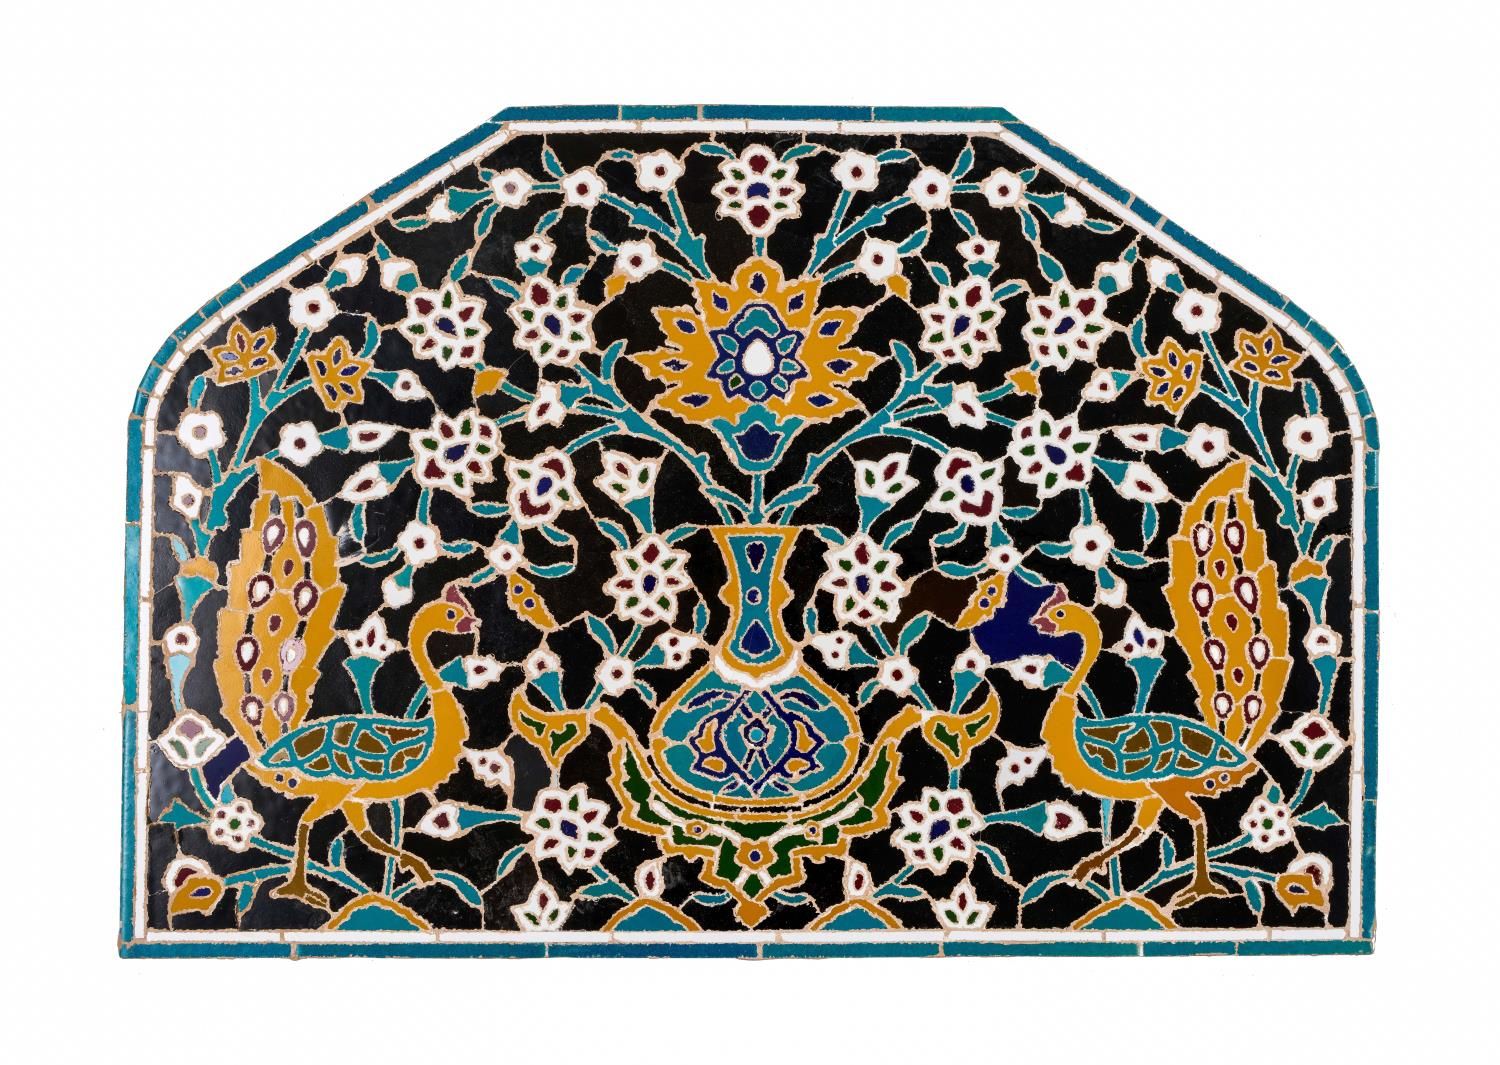 A SAFAVID TILE MOSAIC PANEL IRAN, FIRST THIRD 17TH CENTURY 伊朗 17 世纪前三叶萨法维瓦镶嵌画板
 &hellip;